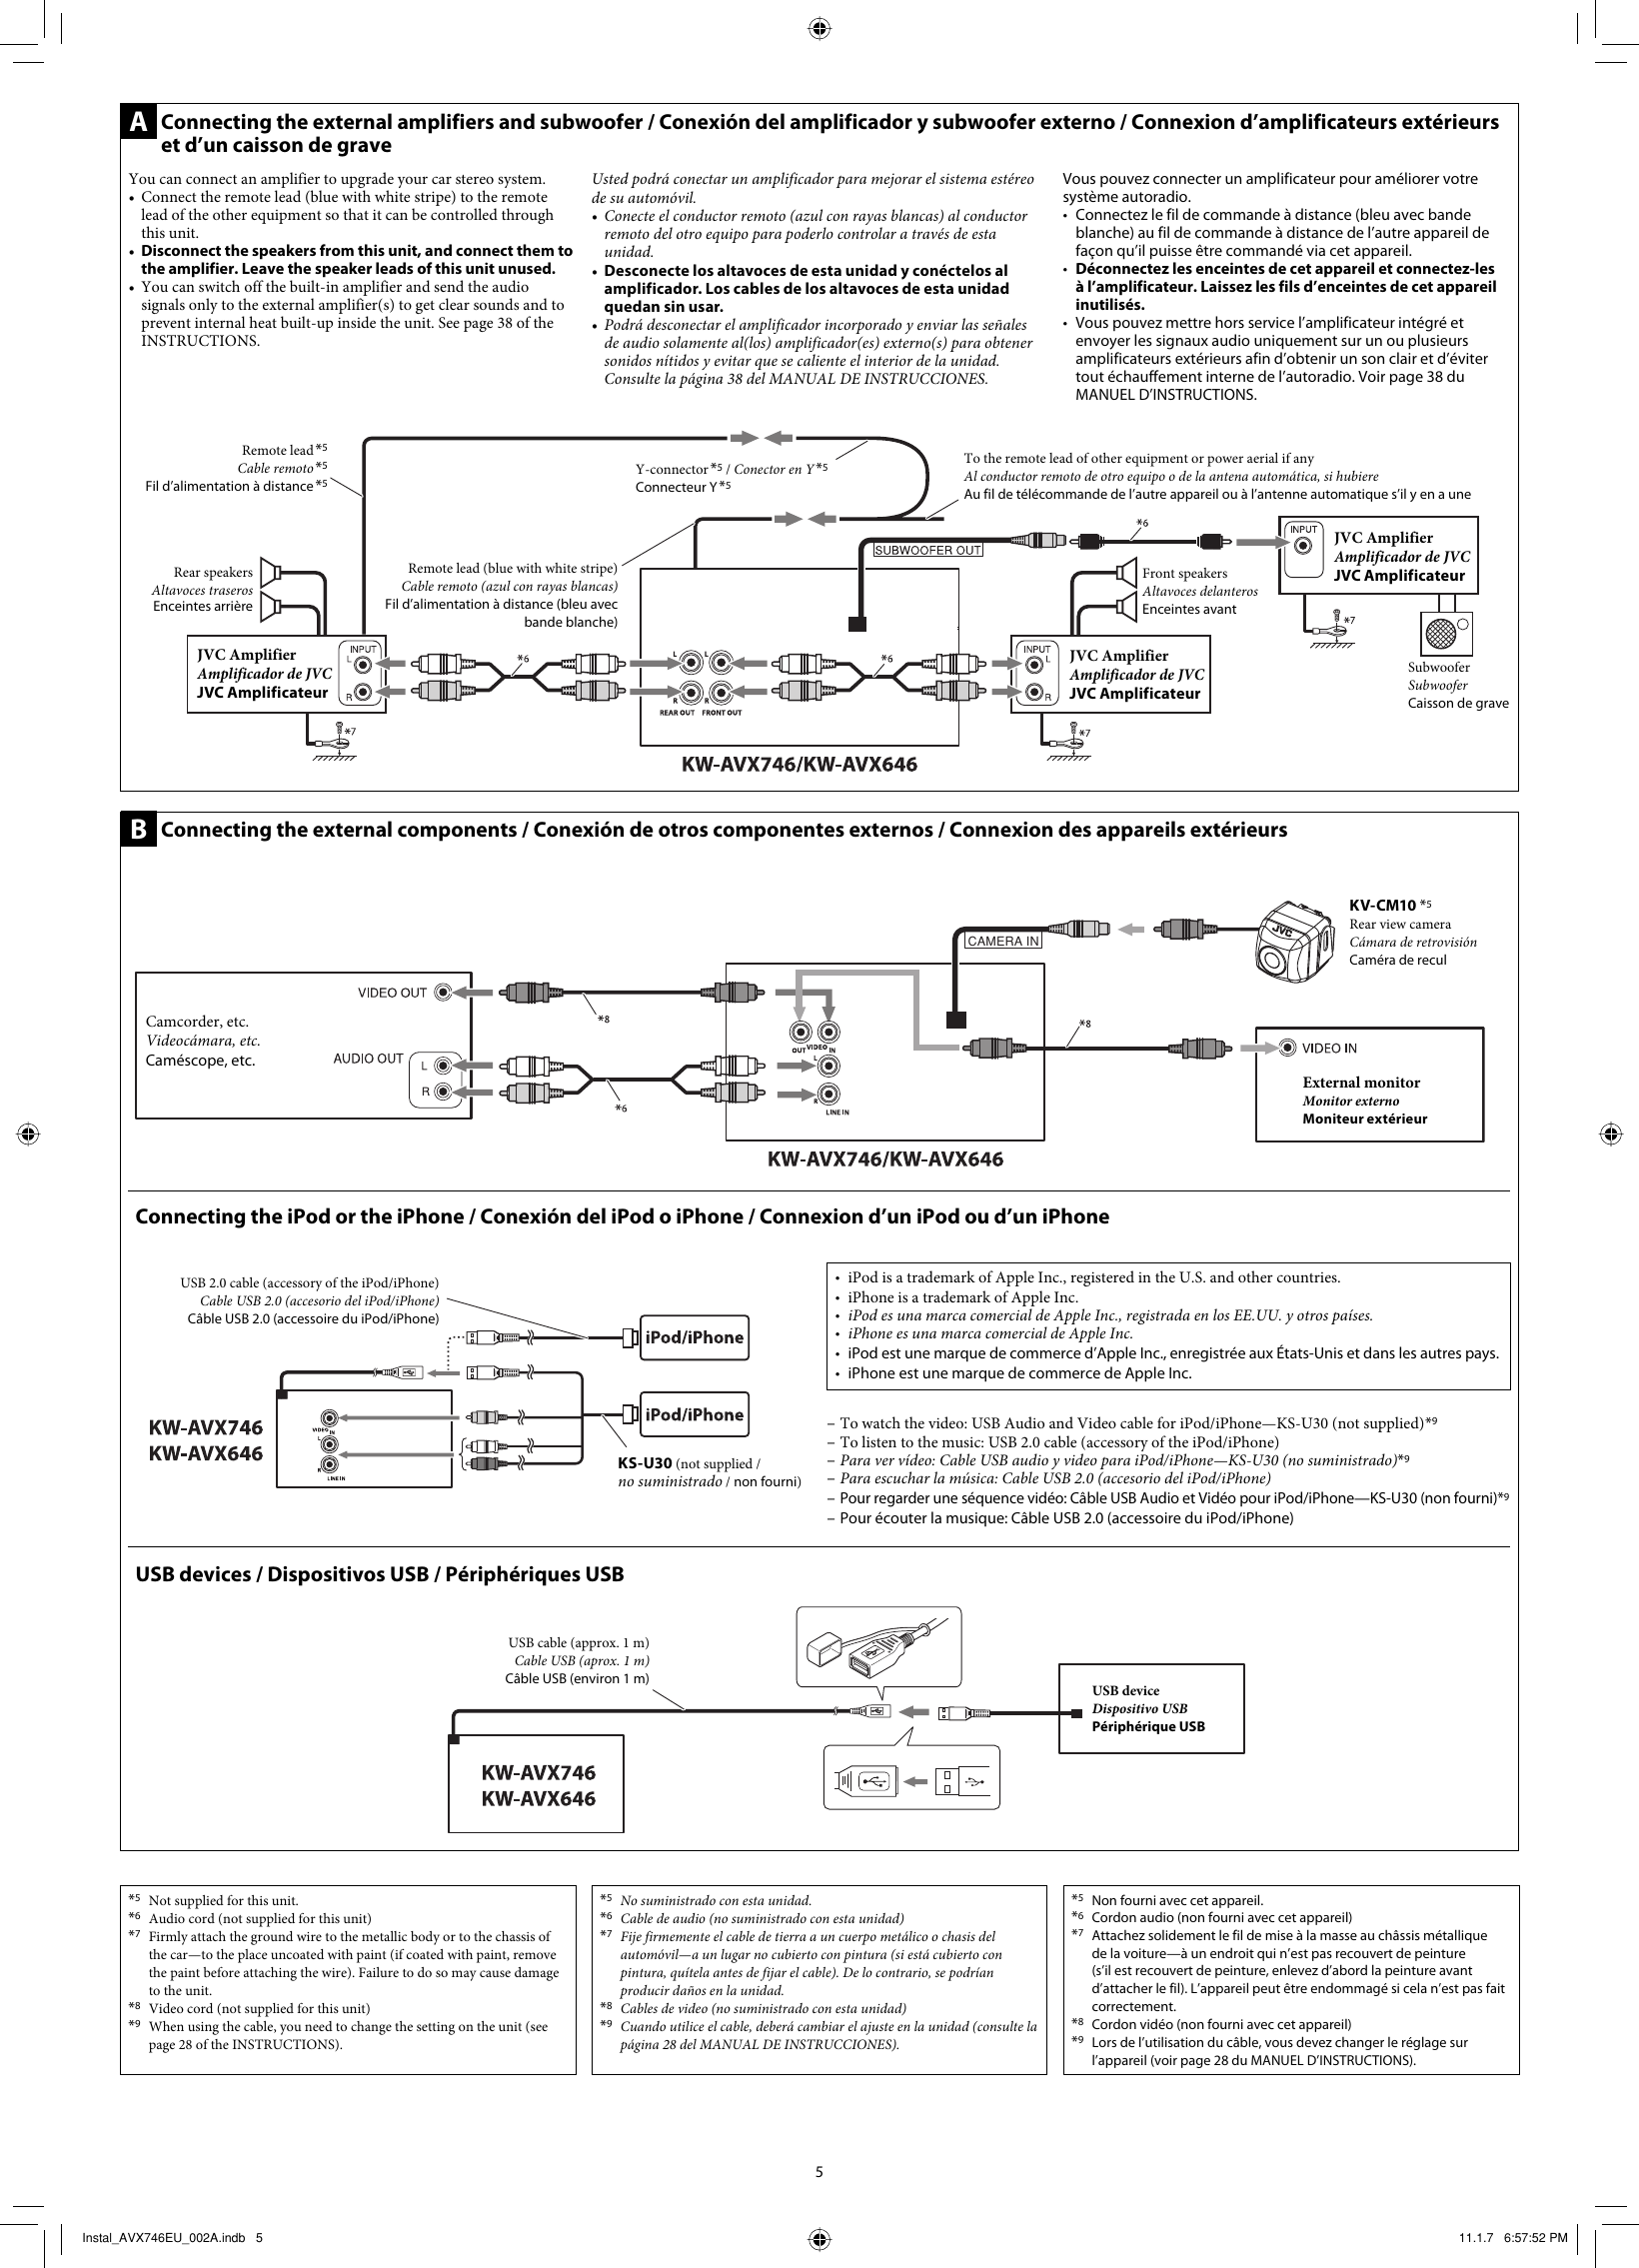 Page 5 of 6 - JVC KW-AVX646EU KW-AVX746/KW-AVX646[EU] User Manual KW-AVX646EU, KW-AVX746EU LVT2176-002A